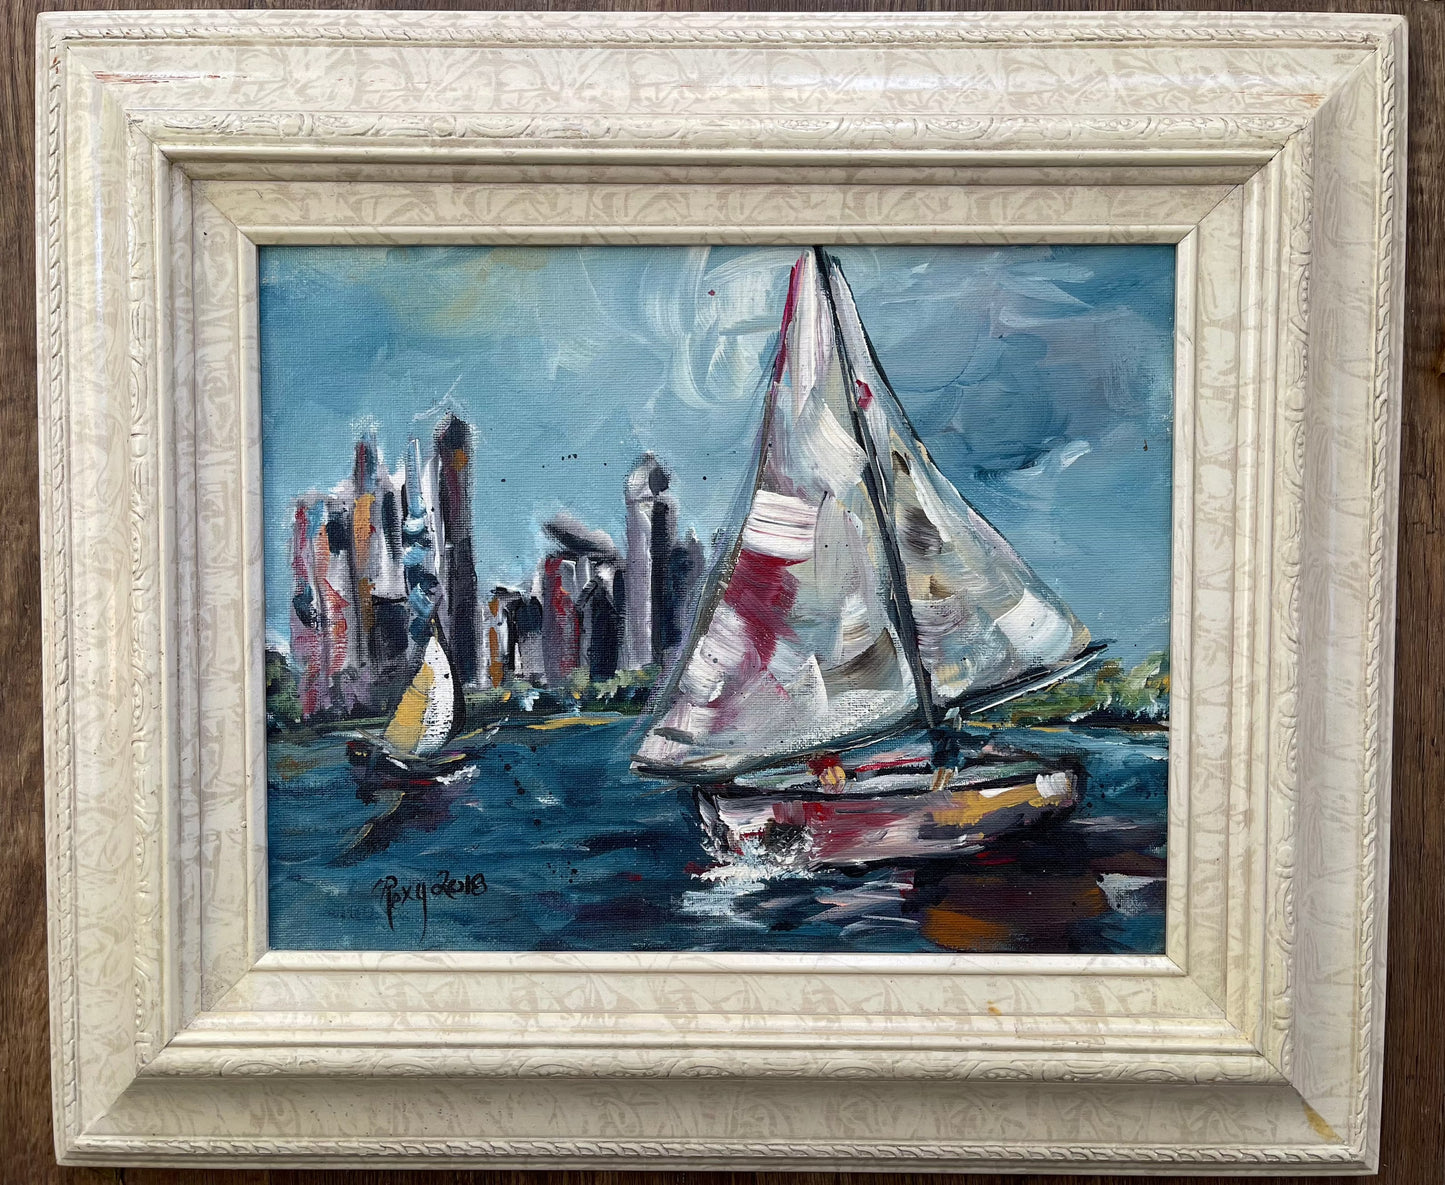 Daytime Sailing, Chicago-Original Acrylic Painting 11 x 14 Framed